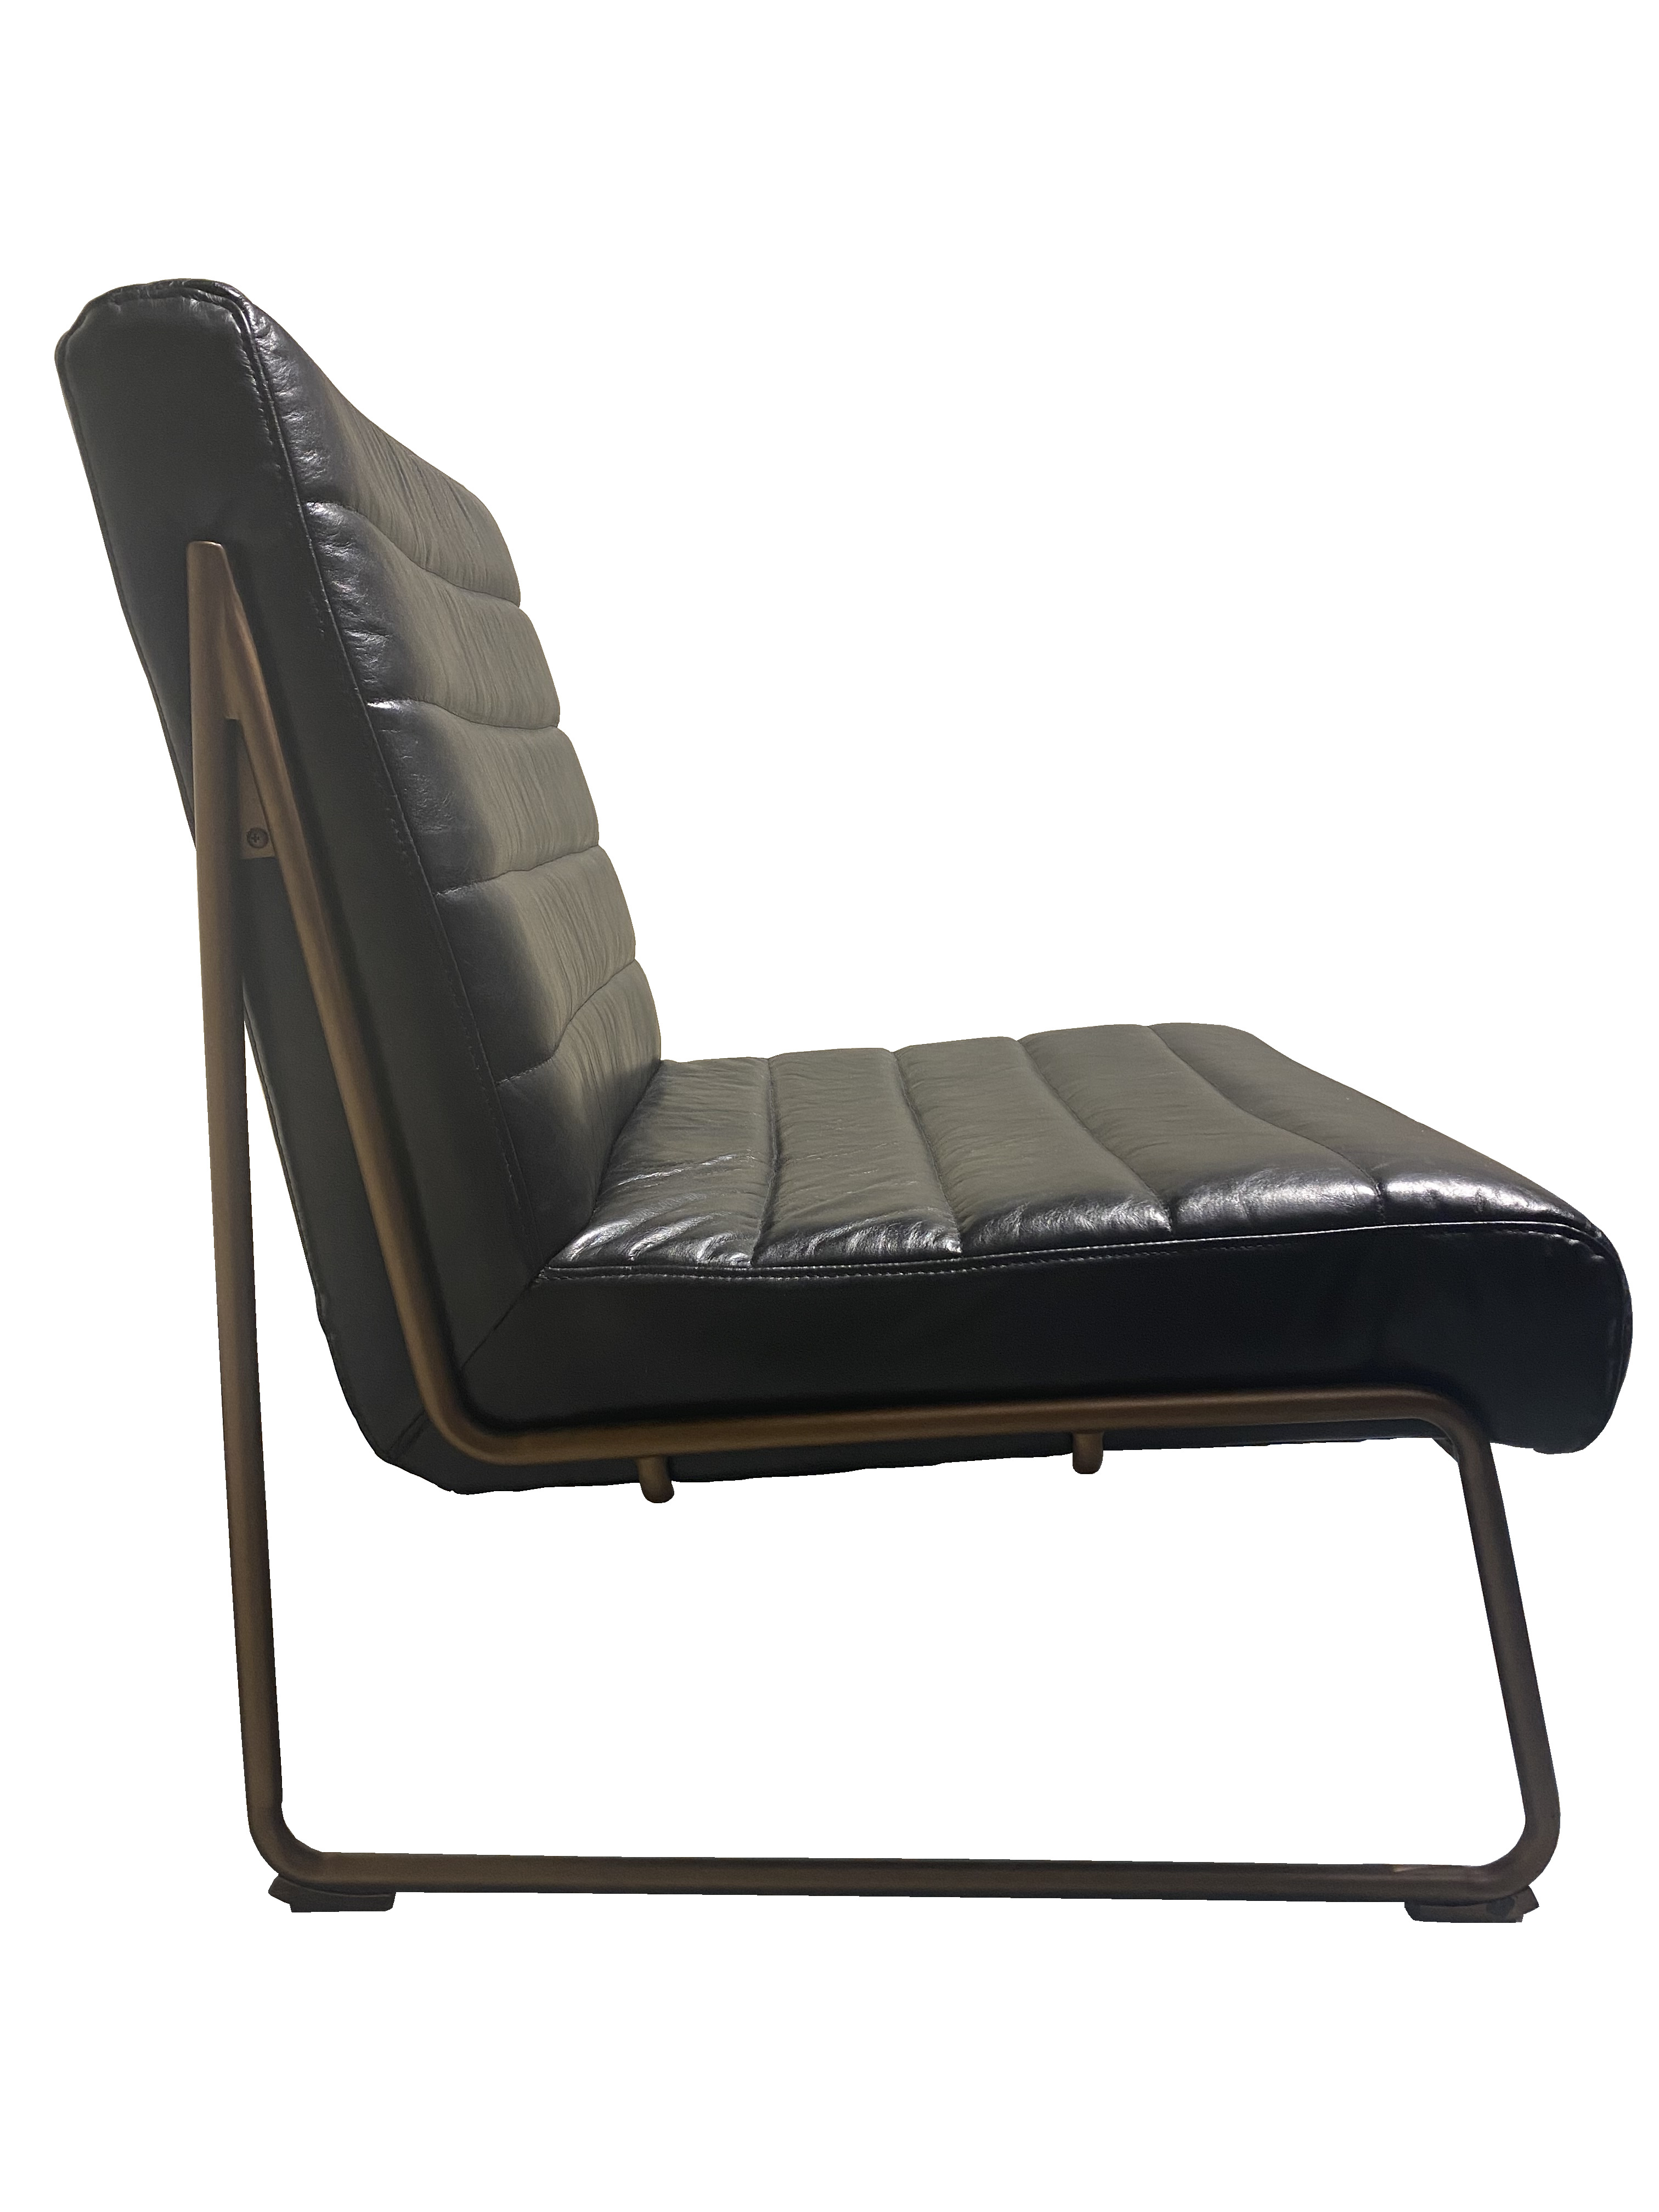 Camero Relaxing Chair